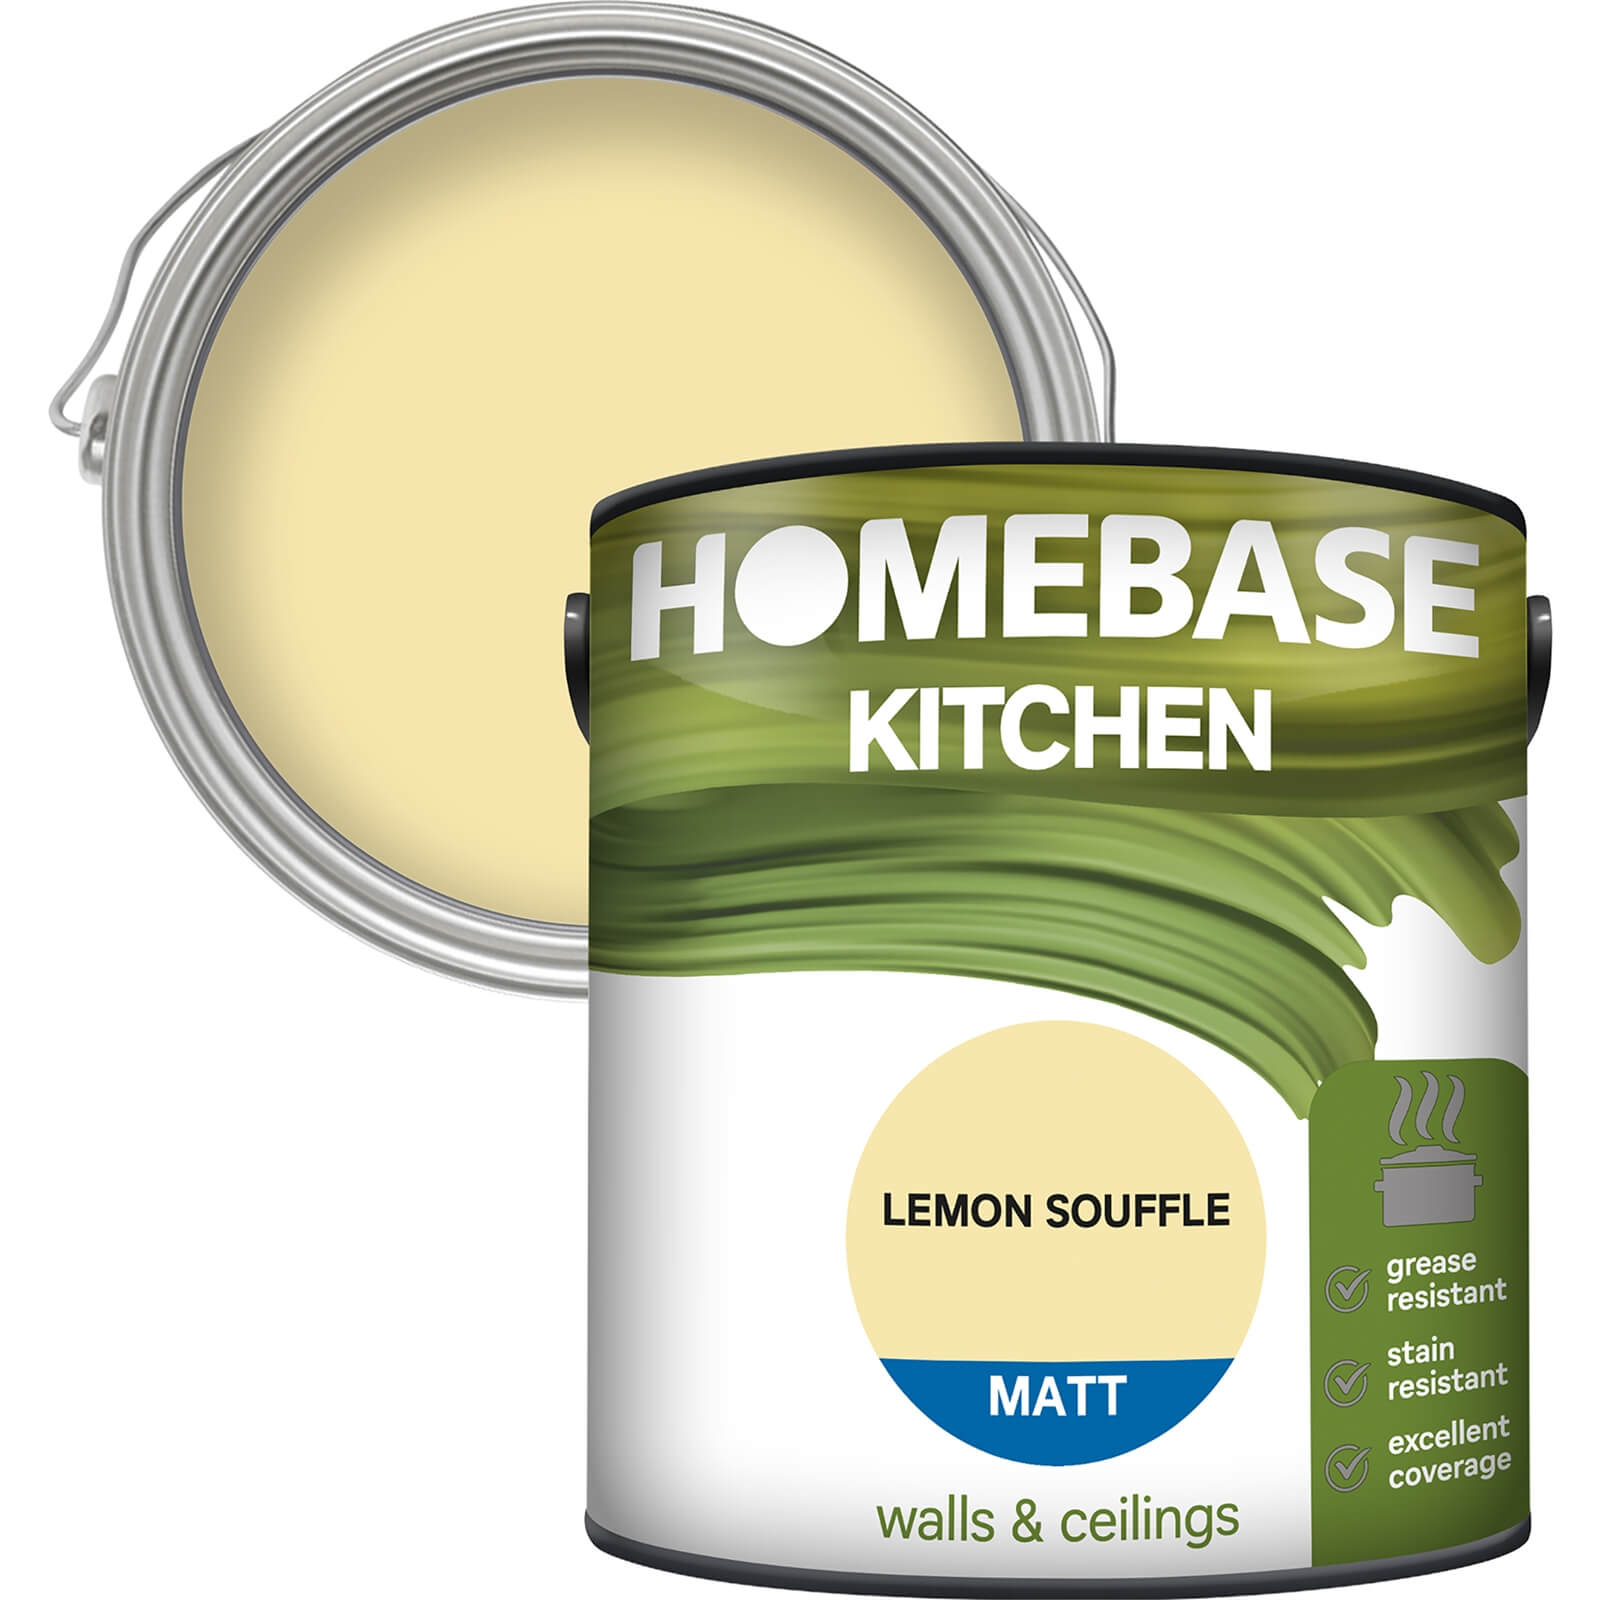 Homebase Kitchen Matt Paint - Lemon Souffle 2.5L